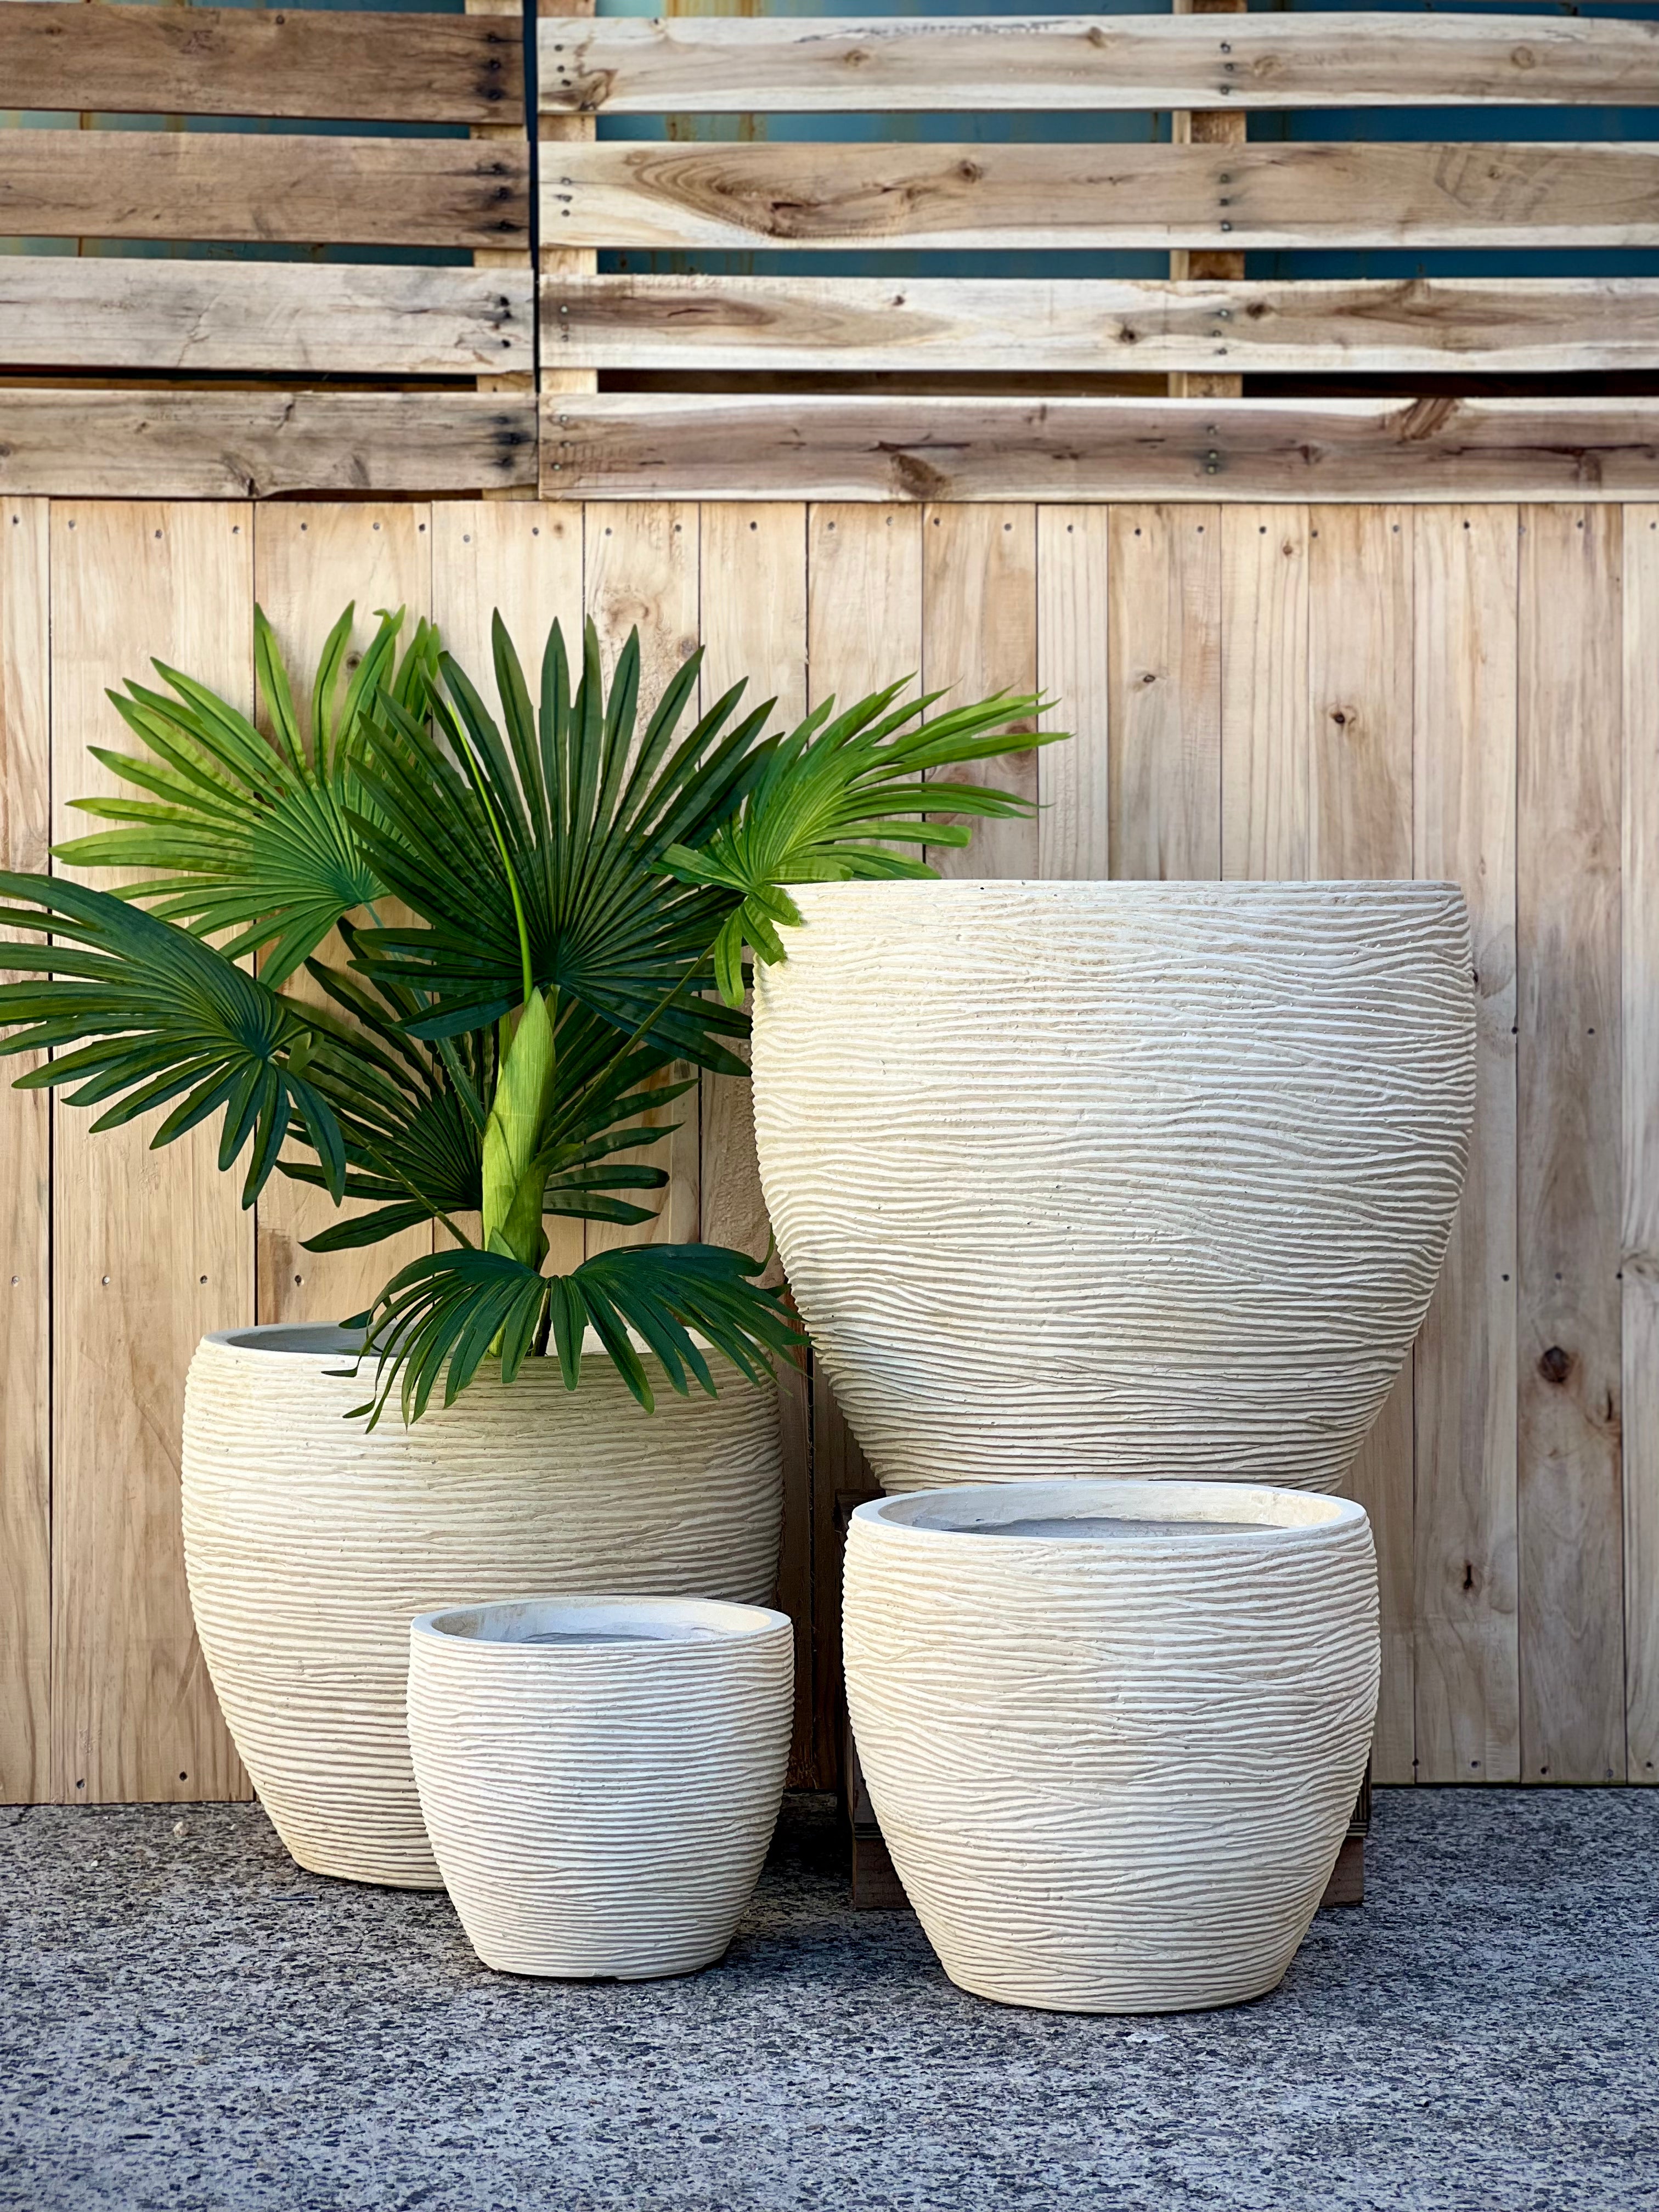 DESERT ROSE - Indoor or Outdoor Fiberclay Lightweight Pot with a Wavy Texture